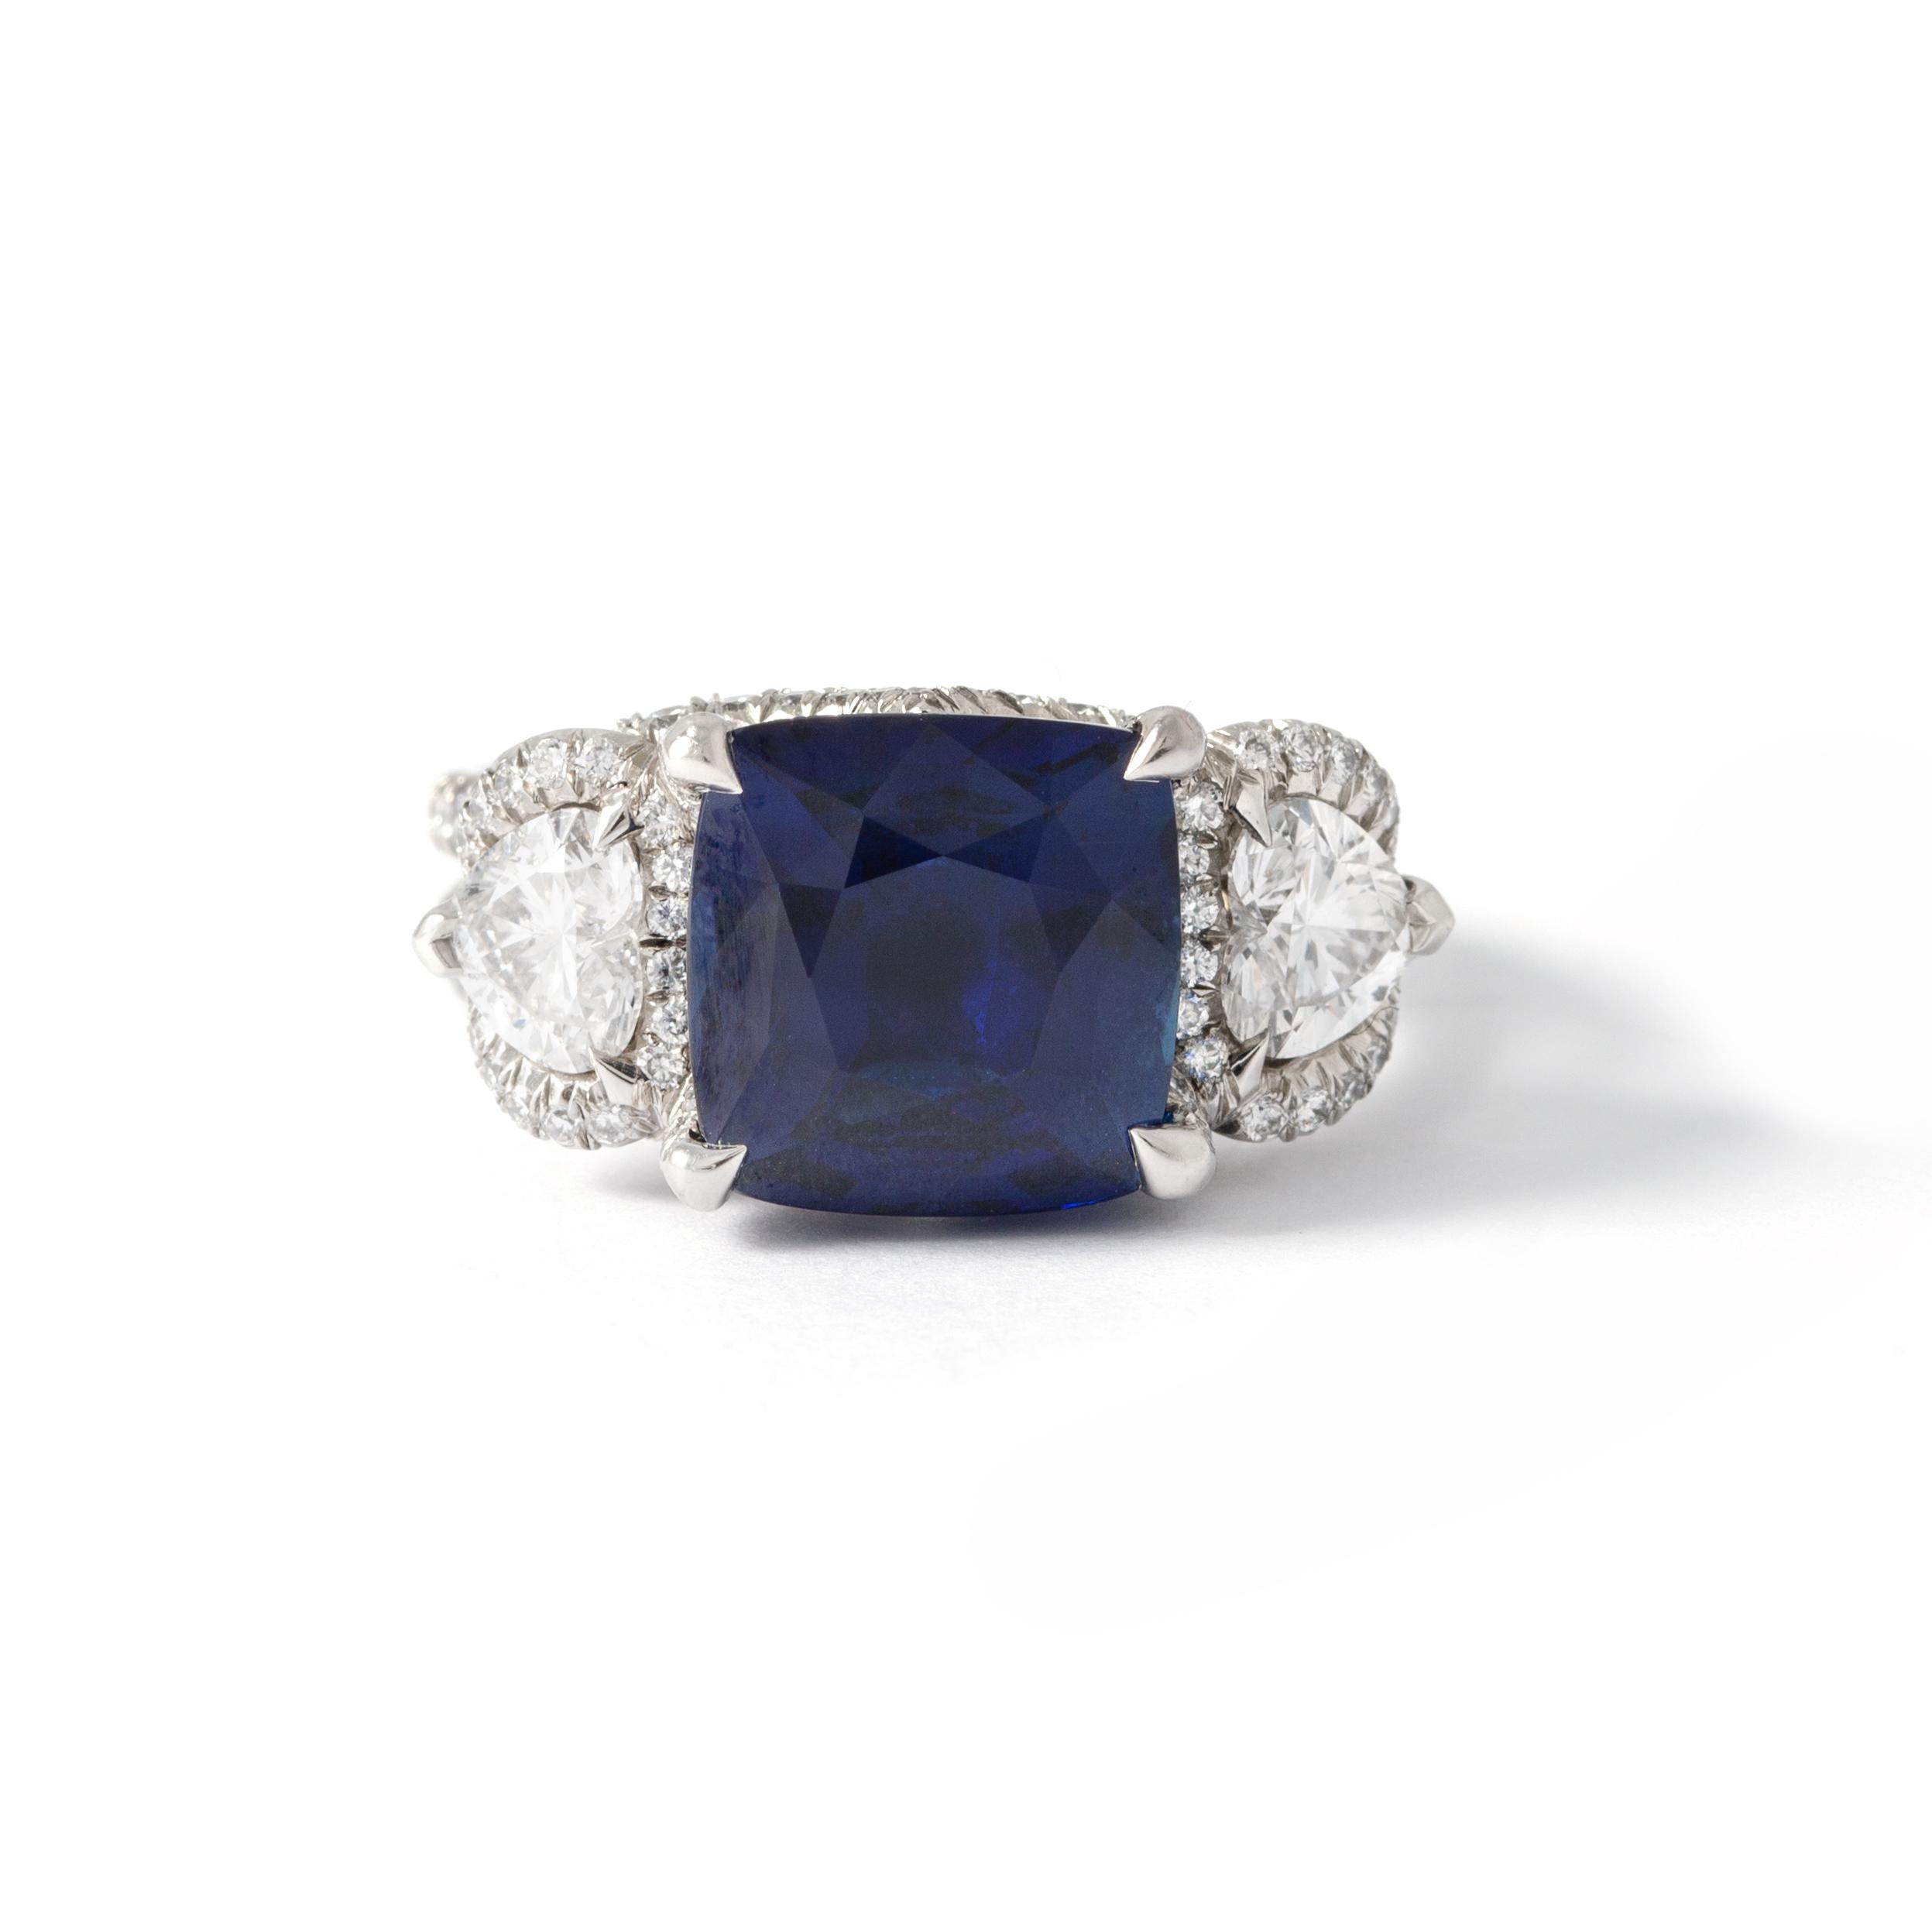 Fabergé 6.01 carat Burmese non heated Natural Sapphire Diamond Platinum Ring.

Diamond 1-Round 0,51ct VS1.
Diamond 1-Round 0,5ct VS1.
Diamonds 22-Round-0,32ct VS1.
Diamonds 96-Round-0,91ct VS1.

Burmese non heated Natural Sapphire is accompanied by